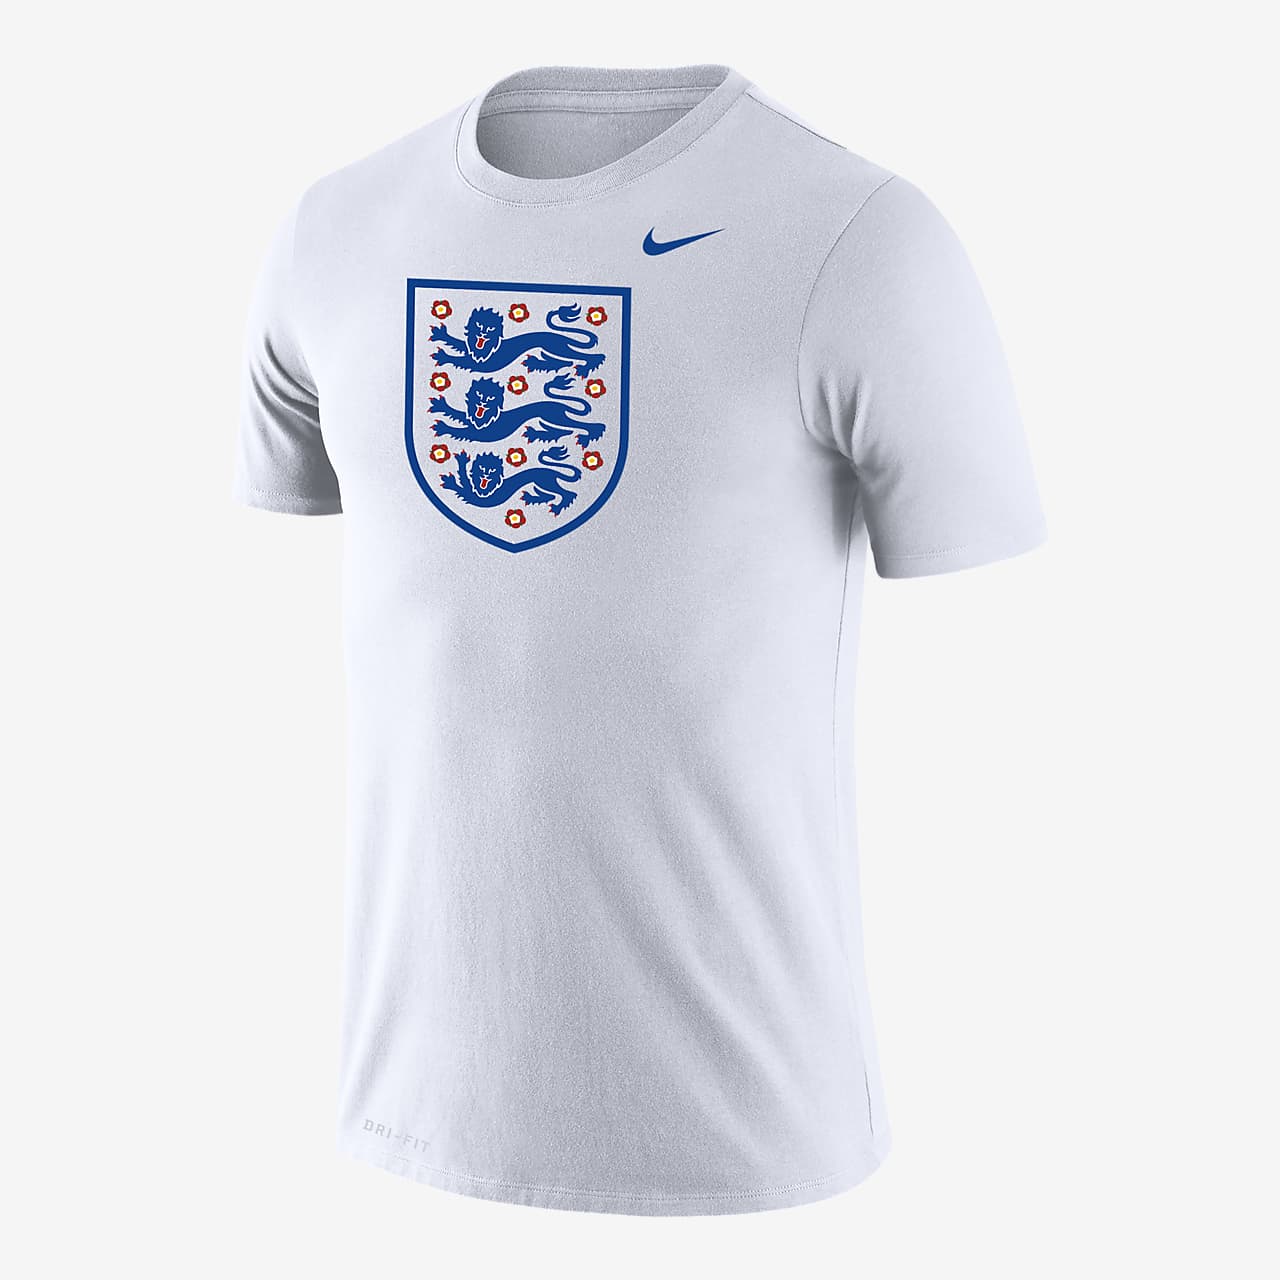 China Met opzet twee England Legend Men's Nike Dri-FIT T-Shirt. Nike.com